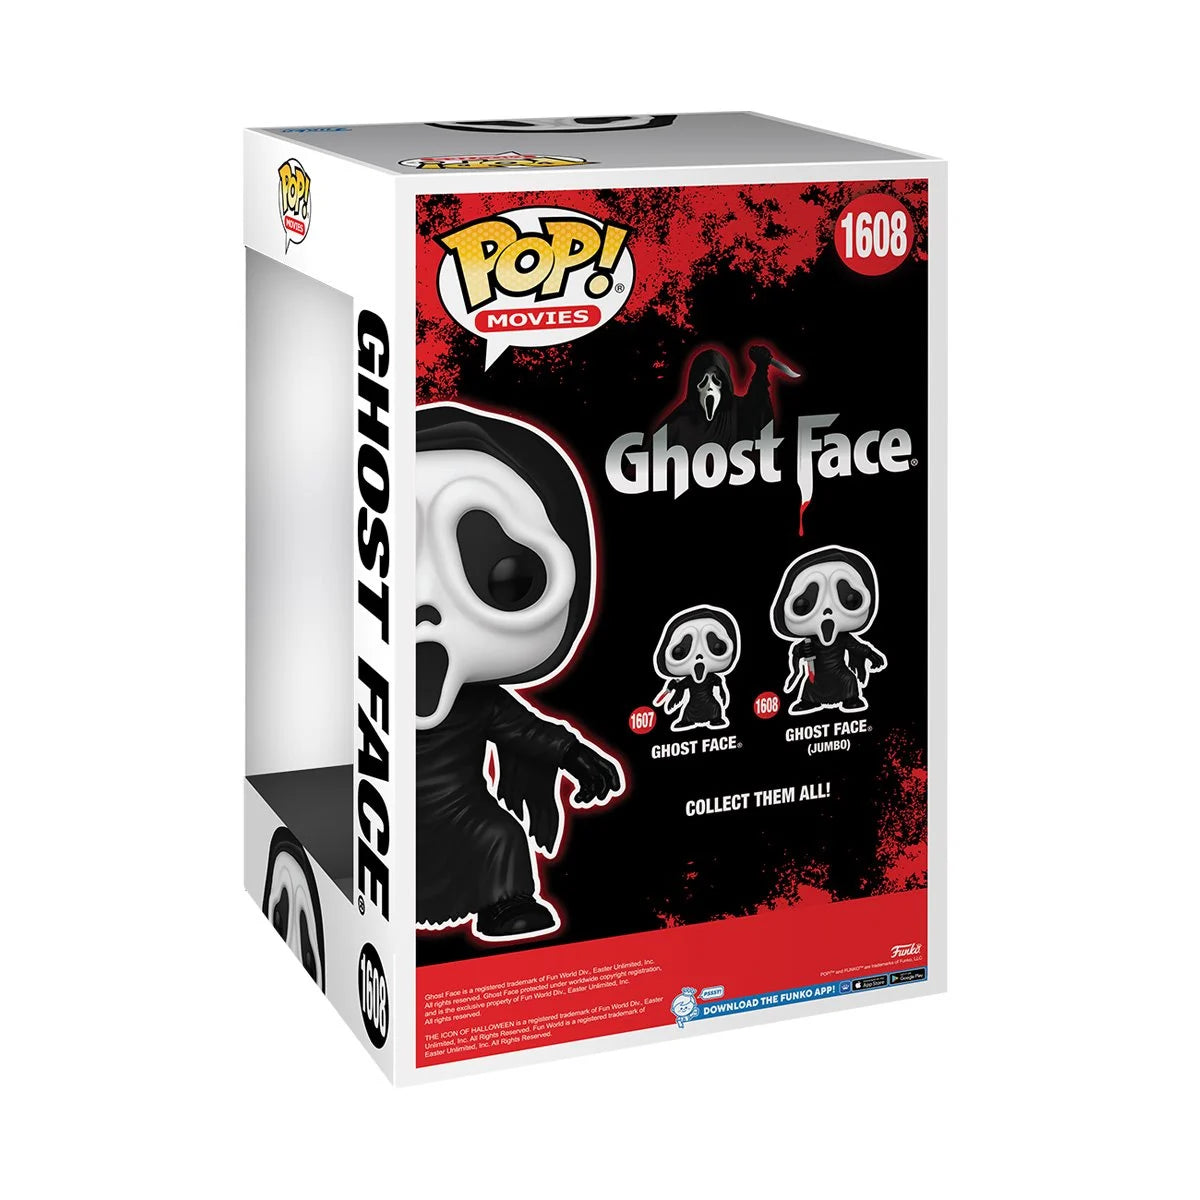 Funko Pop! Ghost Face with Knife Jumbo Vinyl Figure #1608